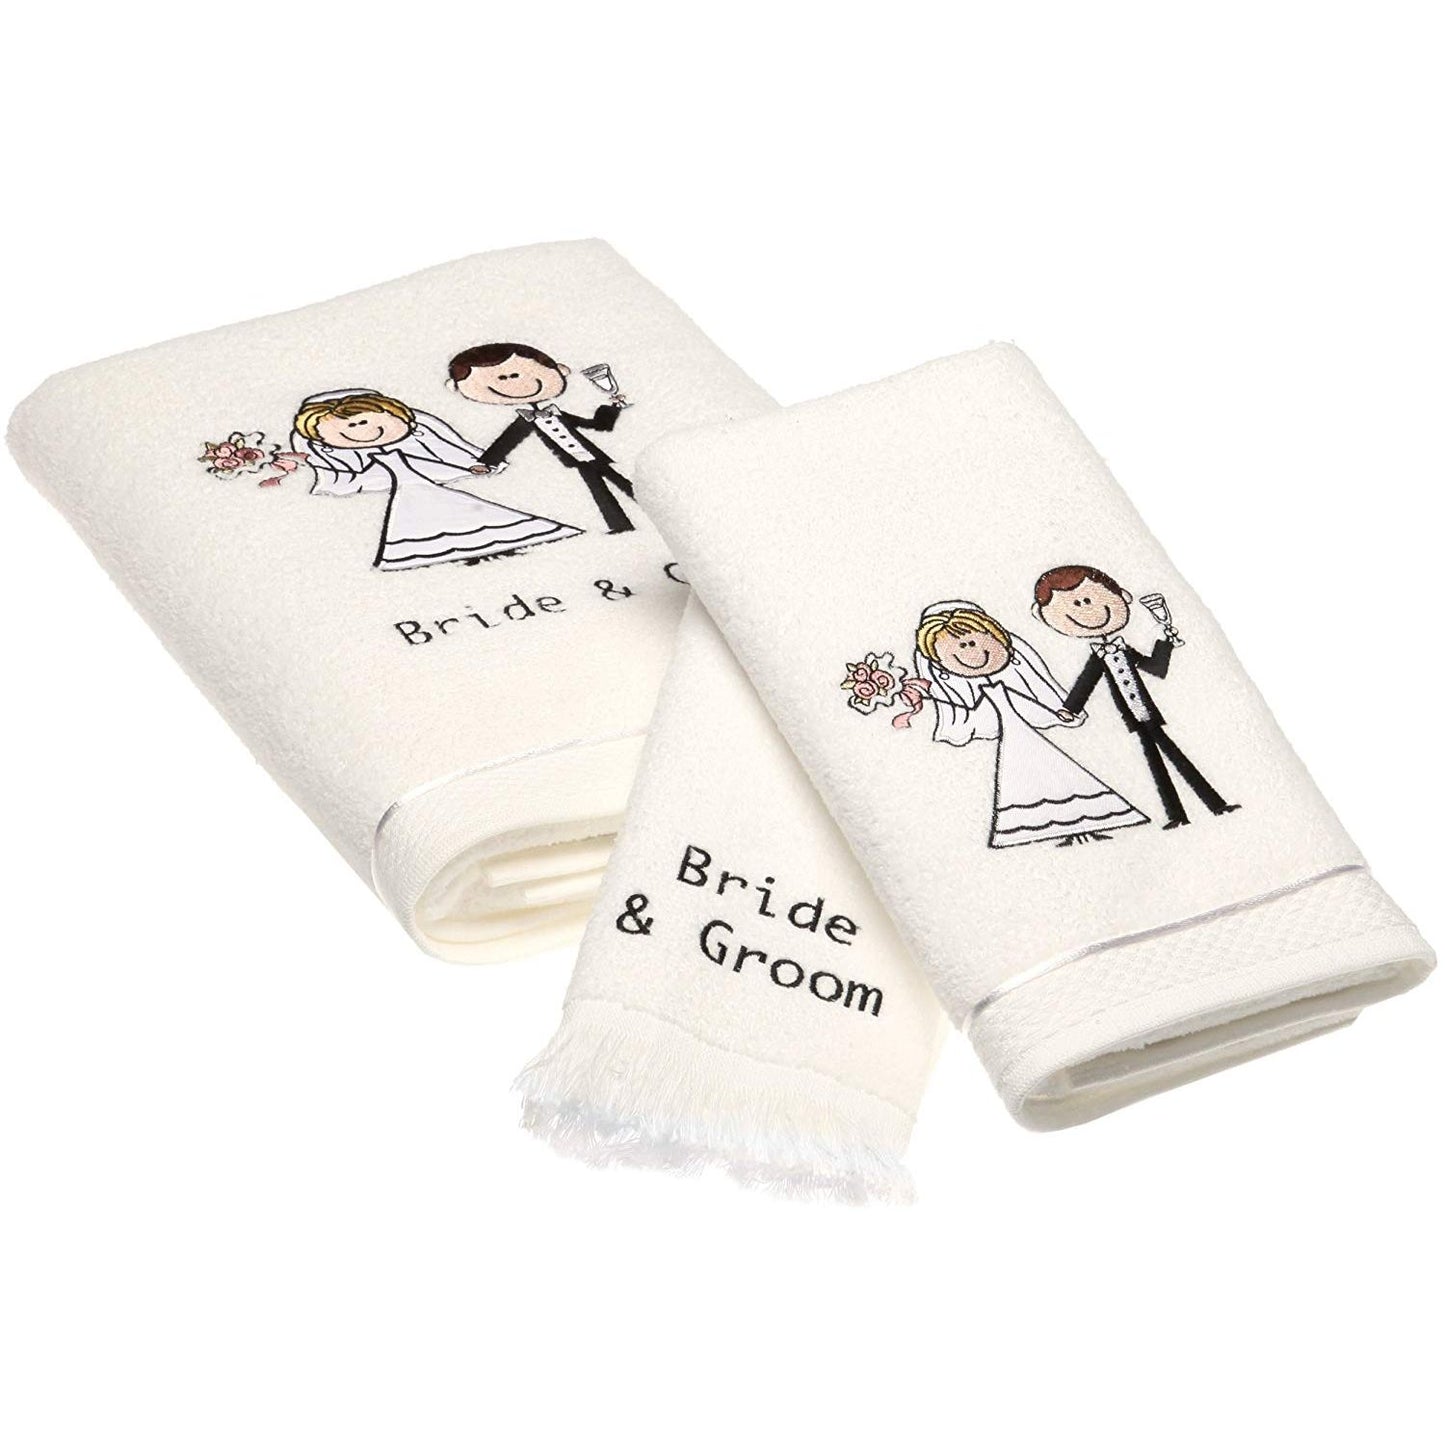 Avanti Bride & Groom Set of 3 Bath Accessories - White